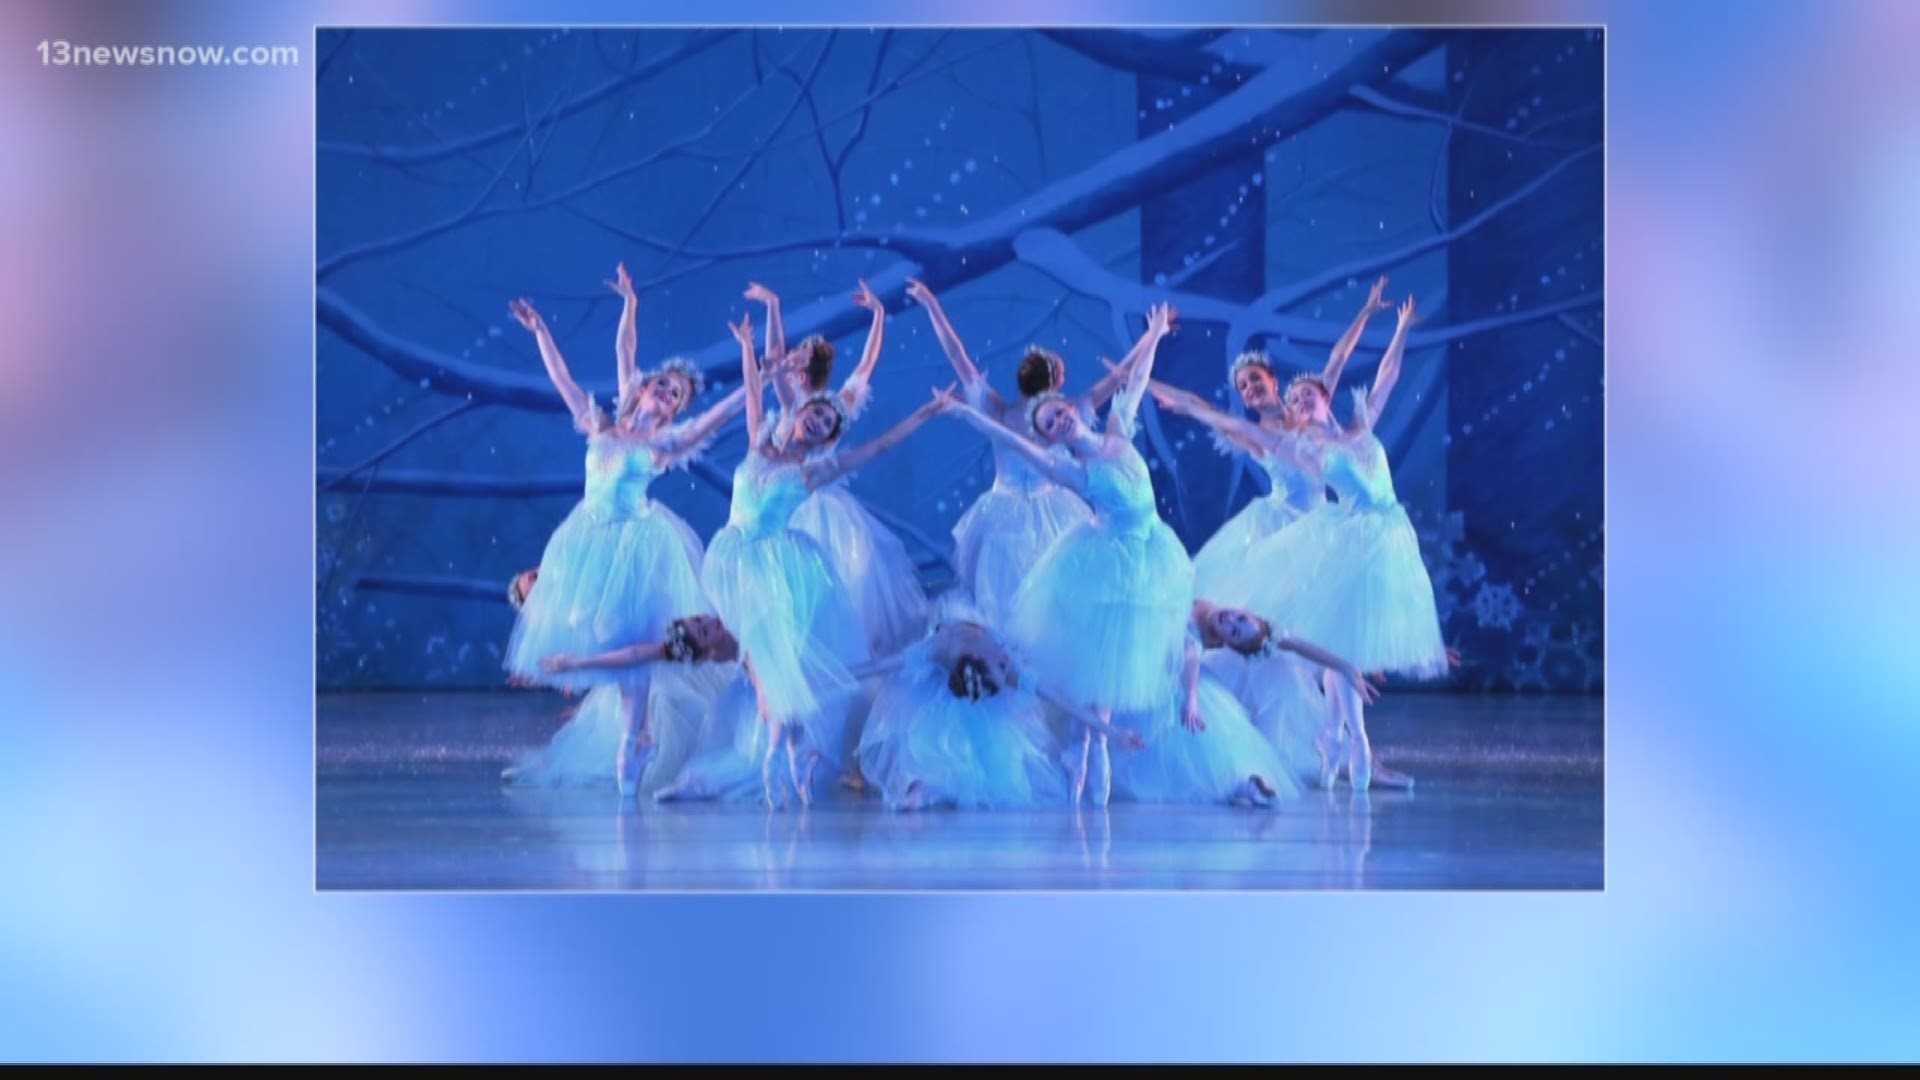 Richmond Ballet's "The Nutcracker" returns to Chrysler Hall in December. The production runs from Dec. 7 through Dec. 9.